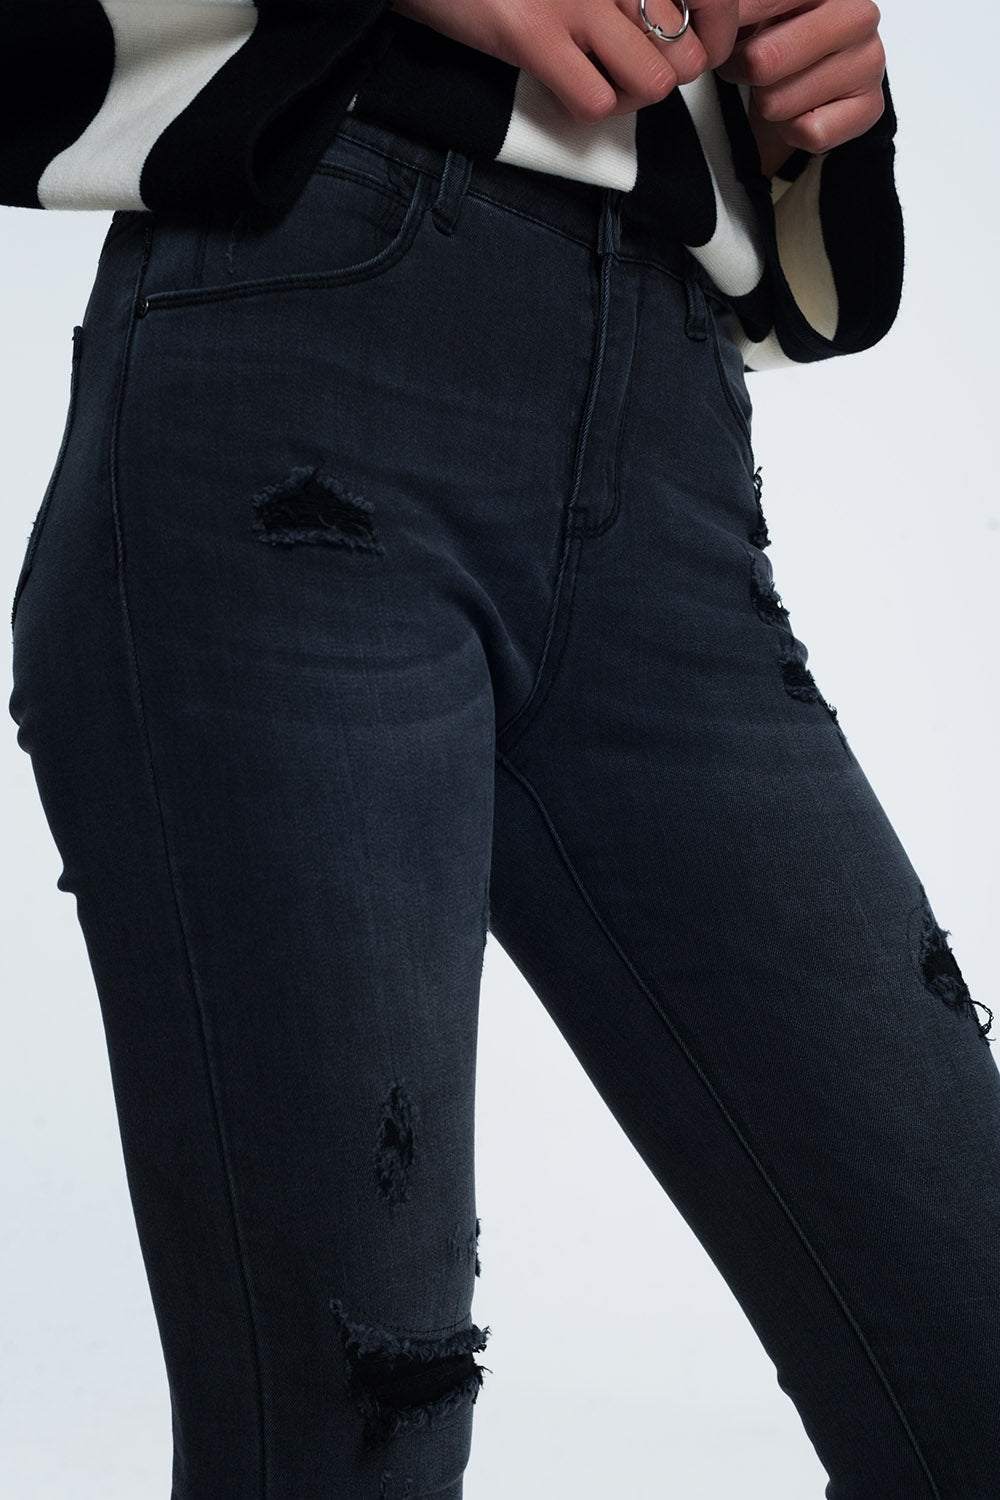 Q2 Distressed skinny jeans in black